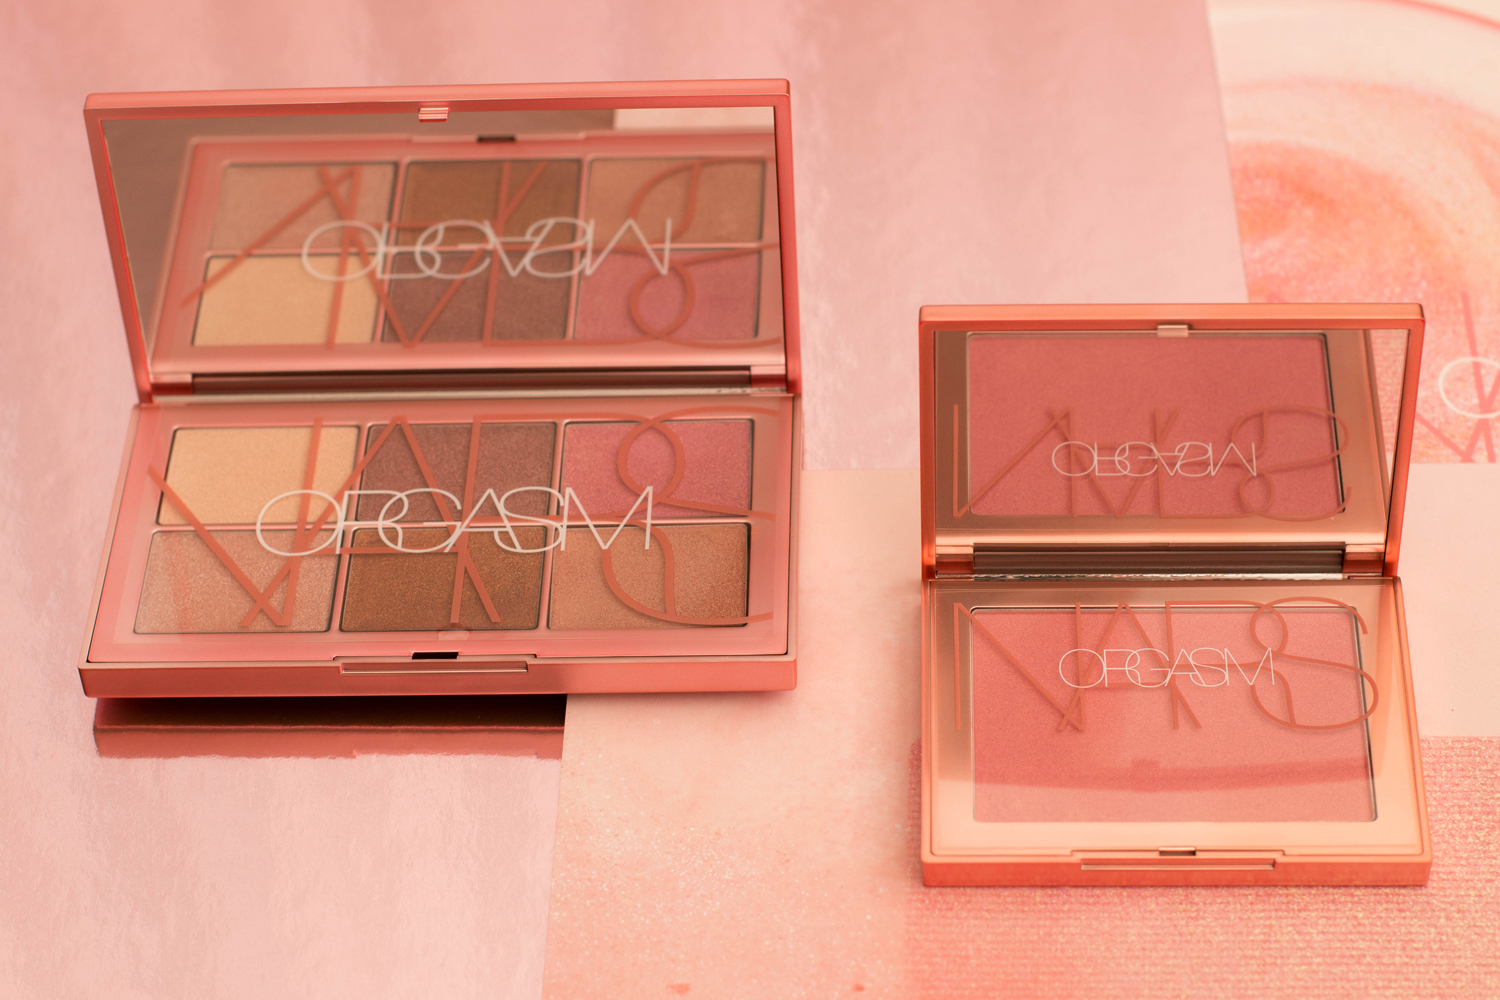 Nars Orgasm Collection Sephora Ulta Nordstrom Beauty Highlighter Blush Palette Lip Gloss Pink